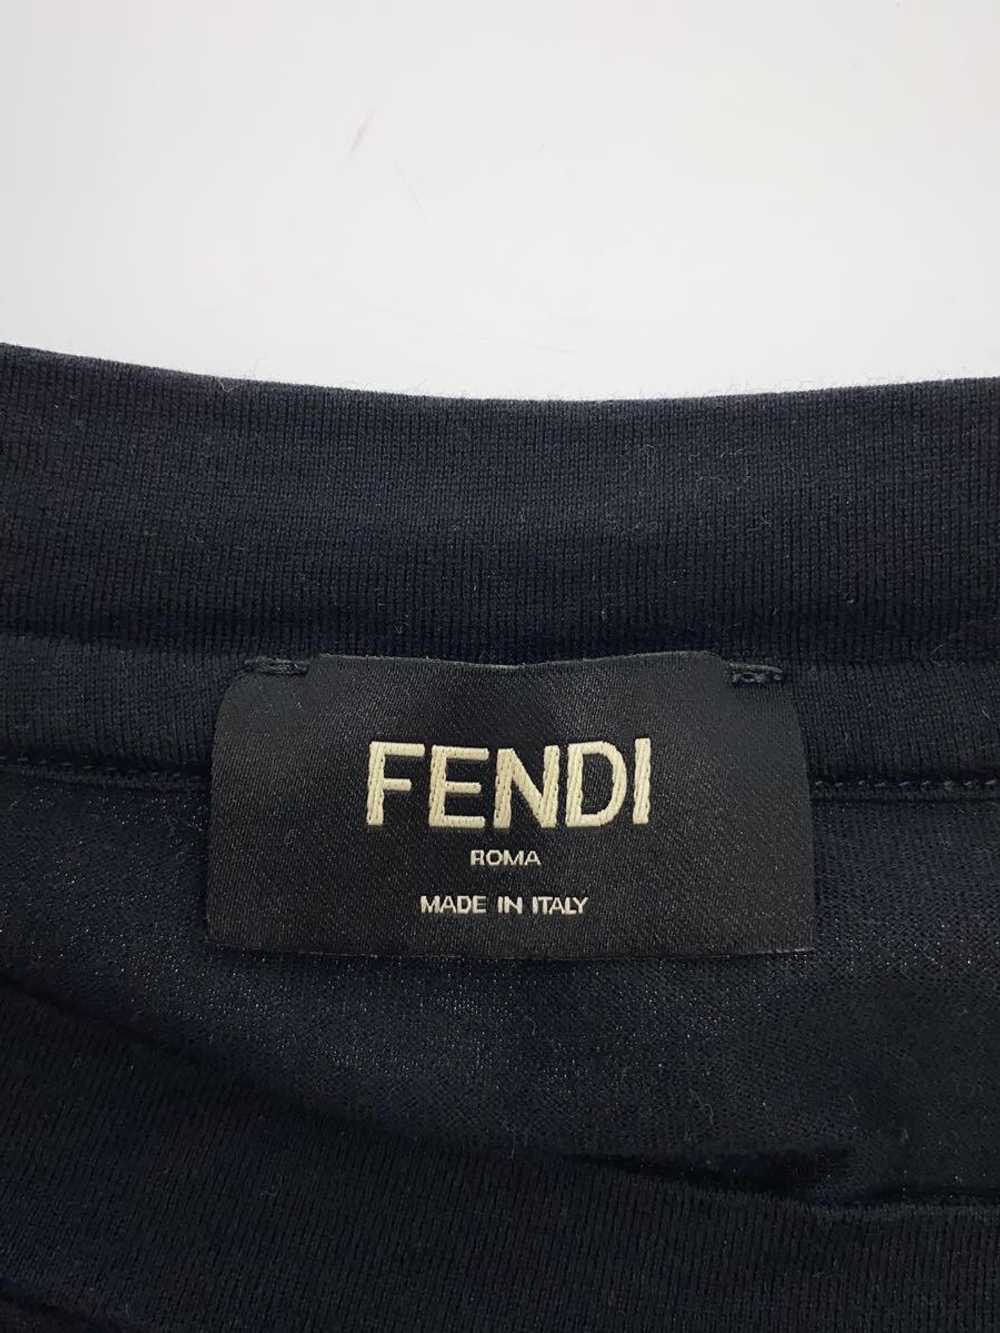 Fendi  T-Shirt XL Cotton Blk Faf682 Wear - image 3